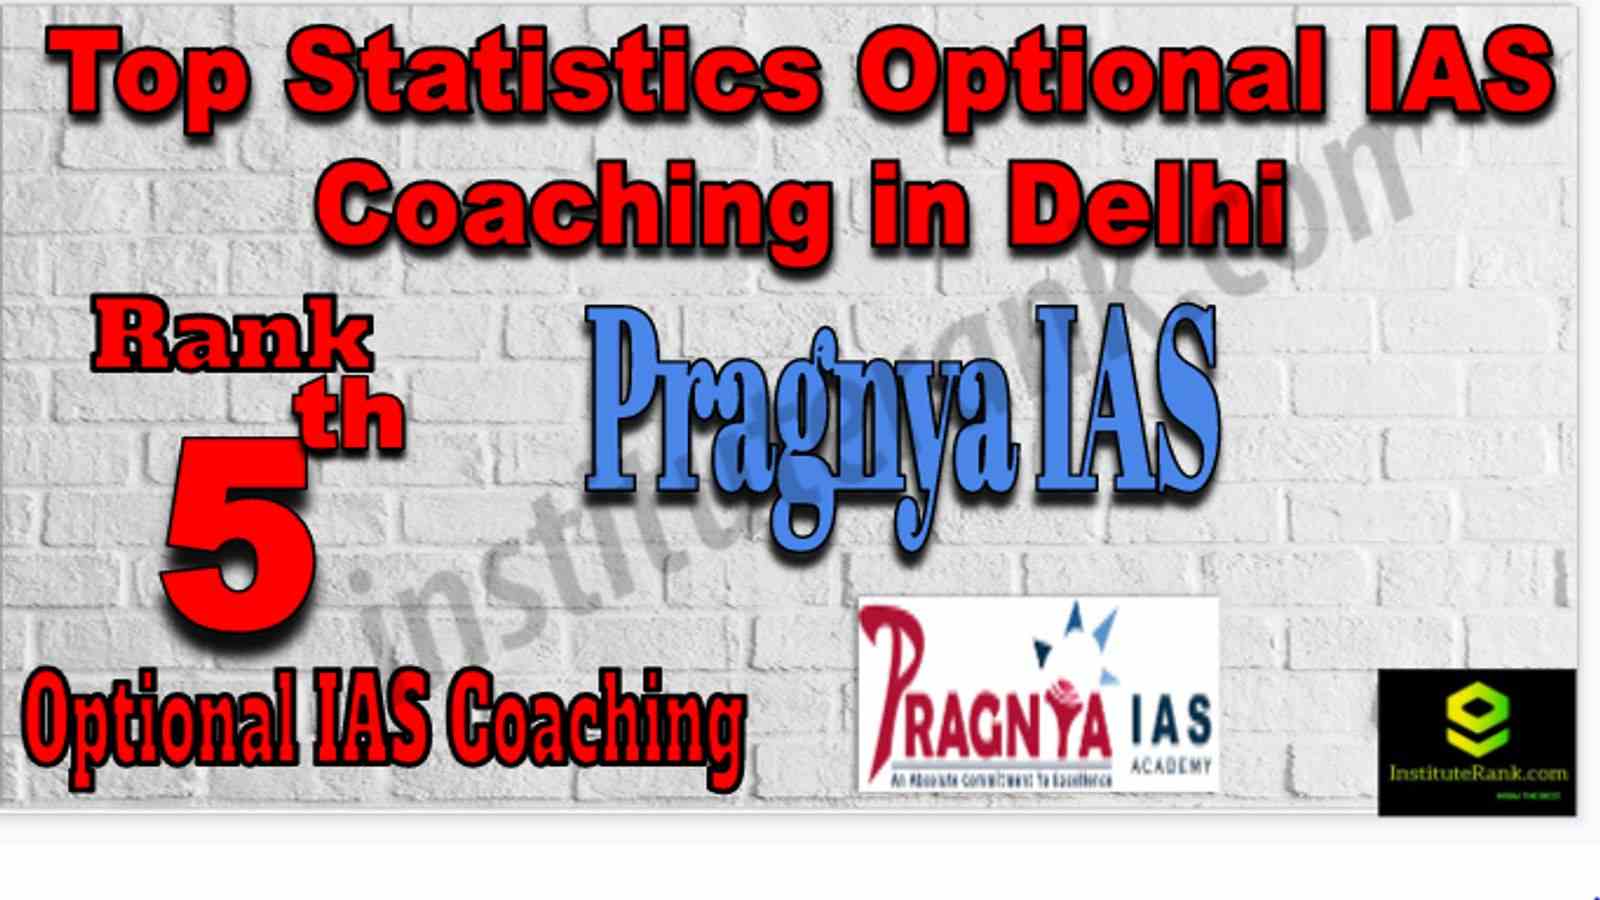 Rank 5 Top Statistics Optional IAS Coaching in Delhi